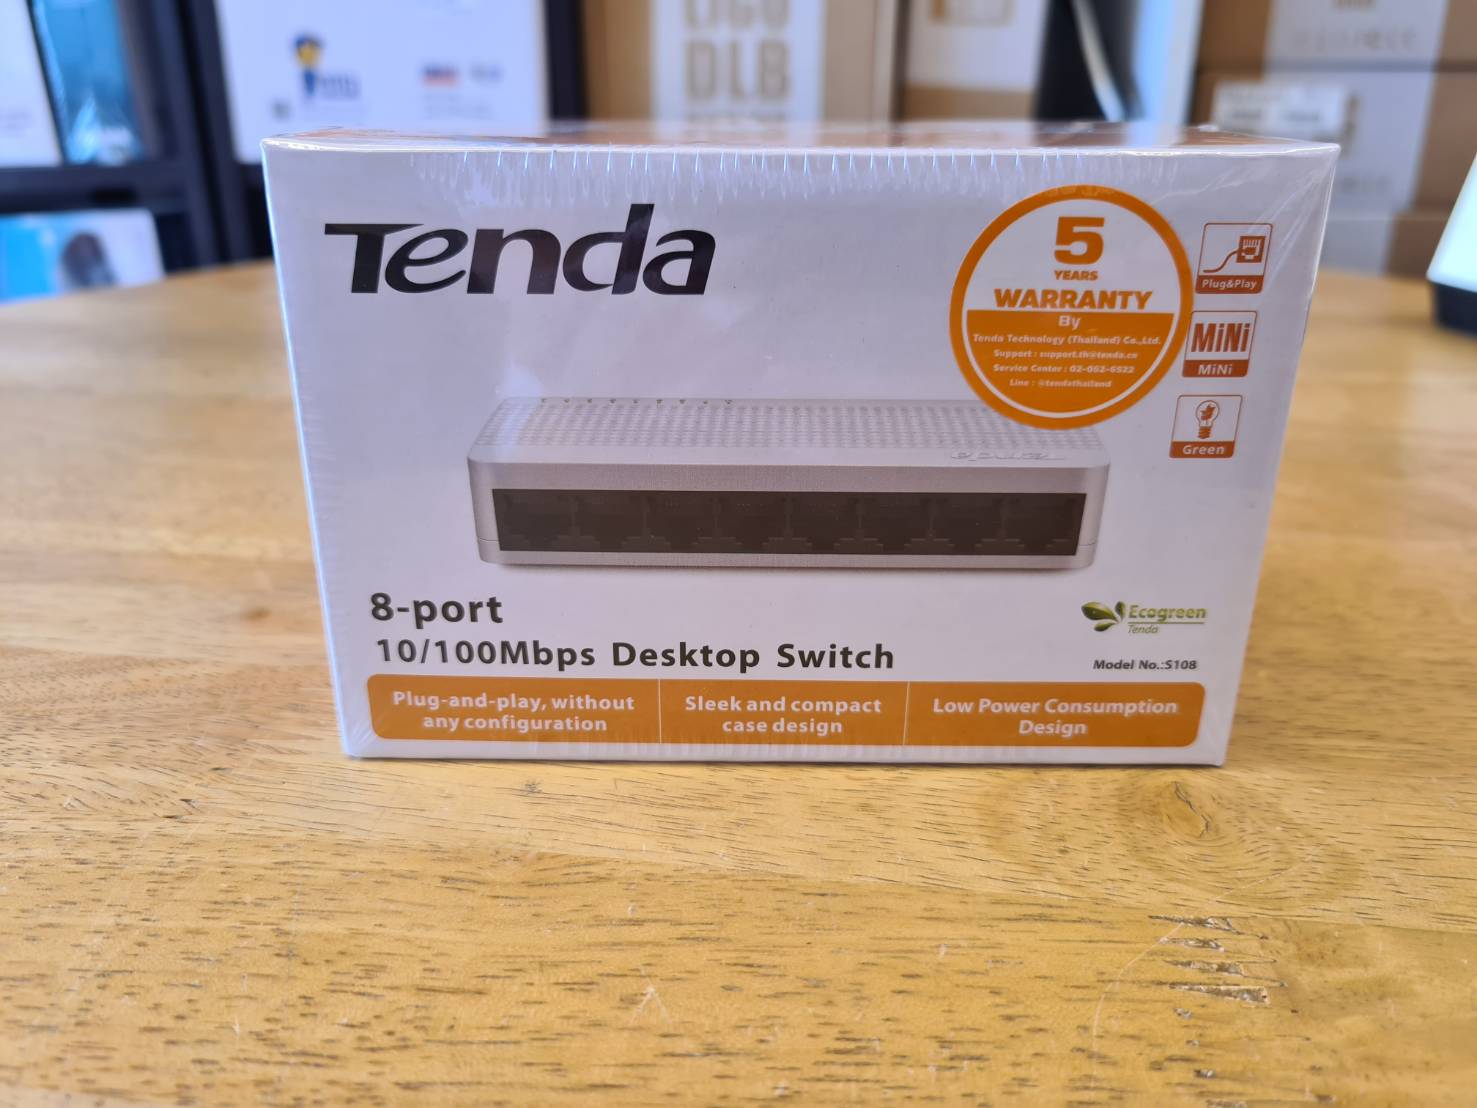 Tenda S108 Switch 8 Port 10/100Mbps ราคาถูก รับประกันศูนย์ Tenda Thailand 5 ปี